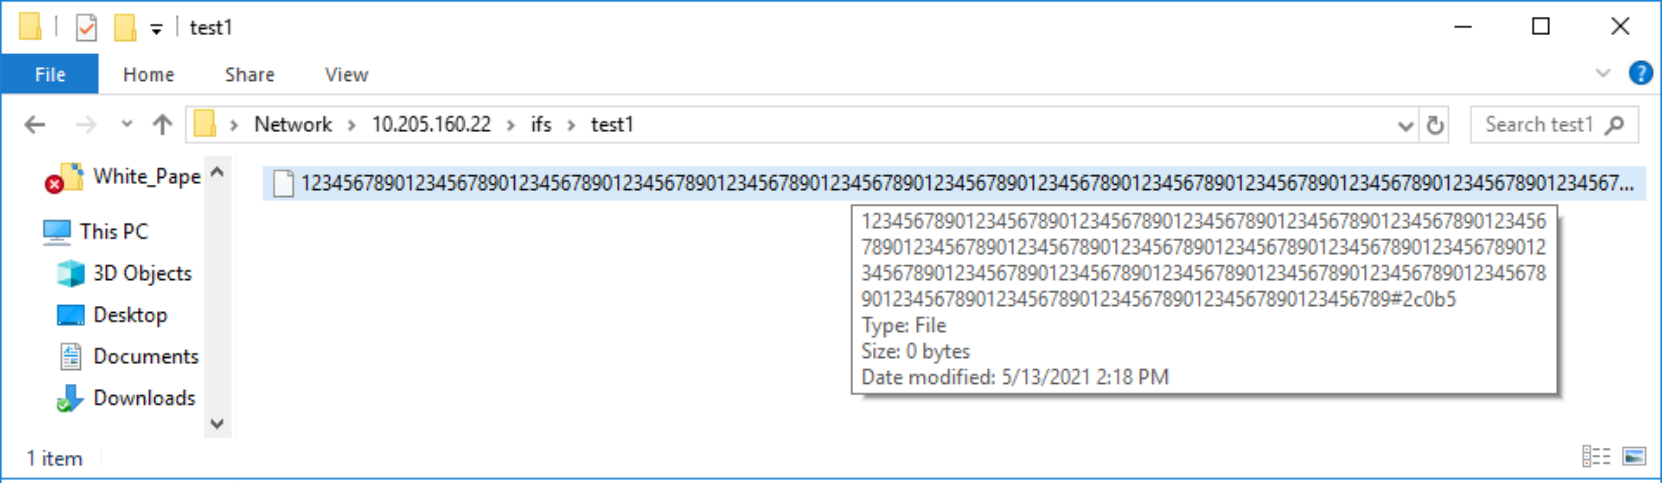 Windows Explorer screenshot showing a mangled filename.